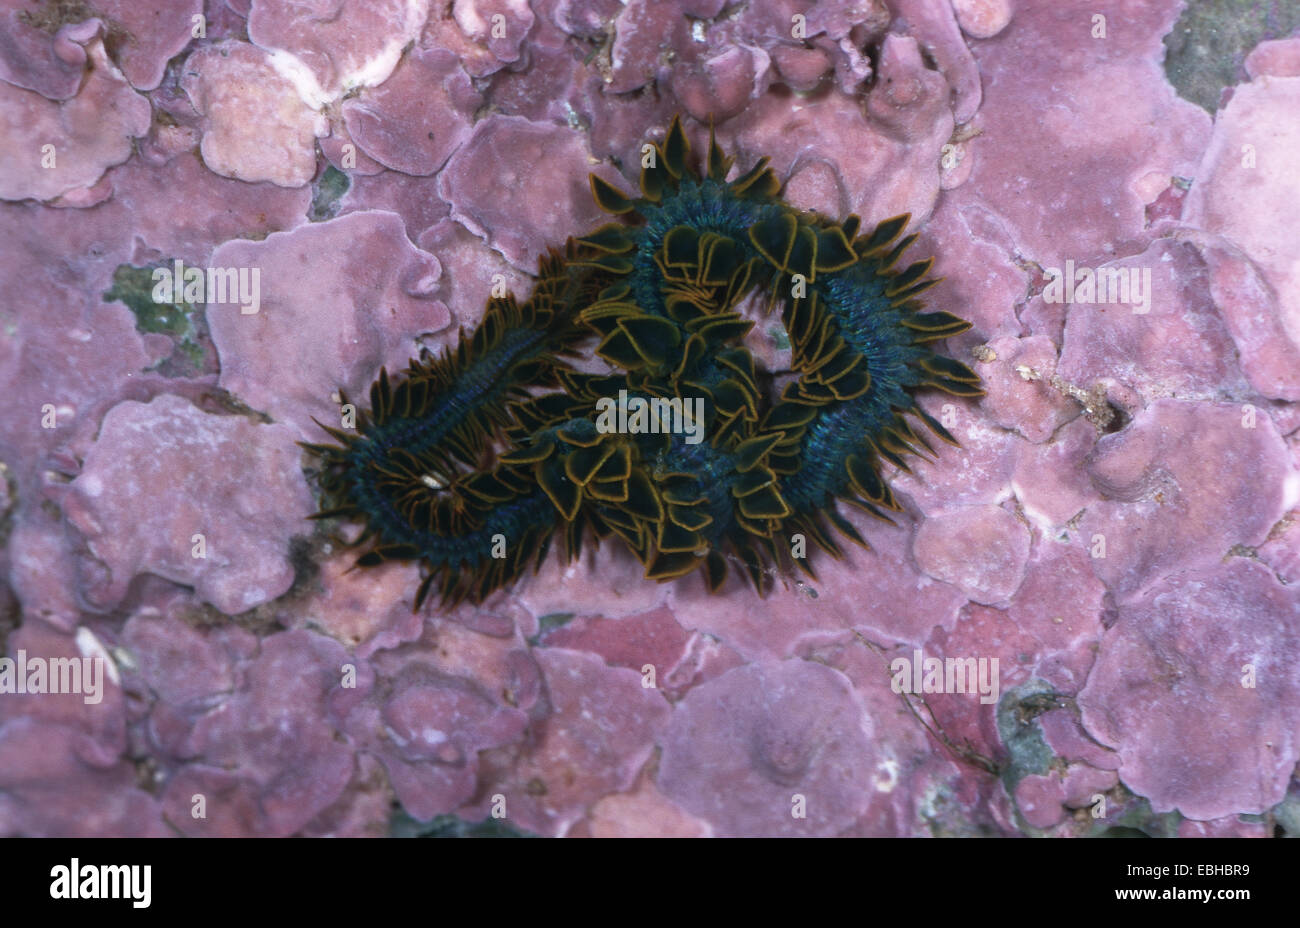 paddleworm (Phyllodoce paretti). Stock Photo